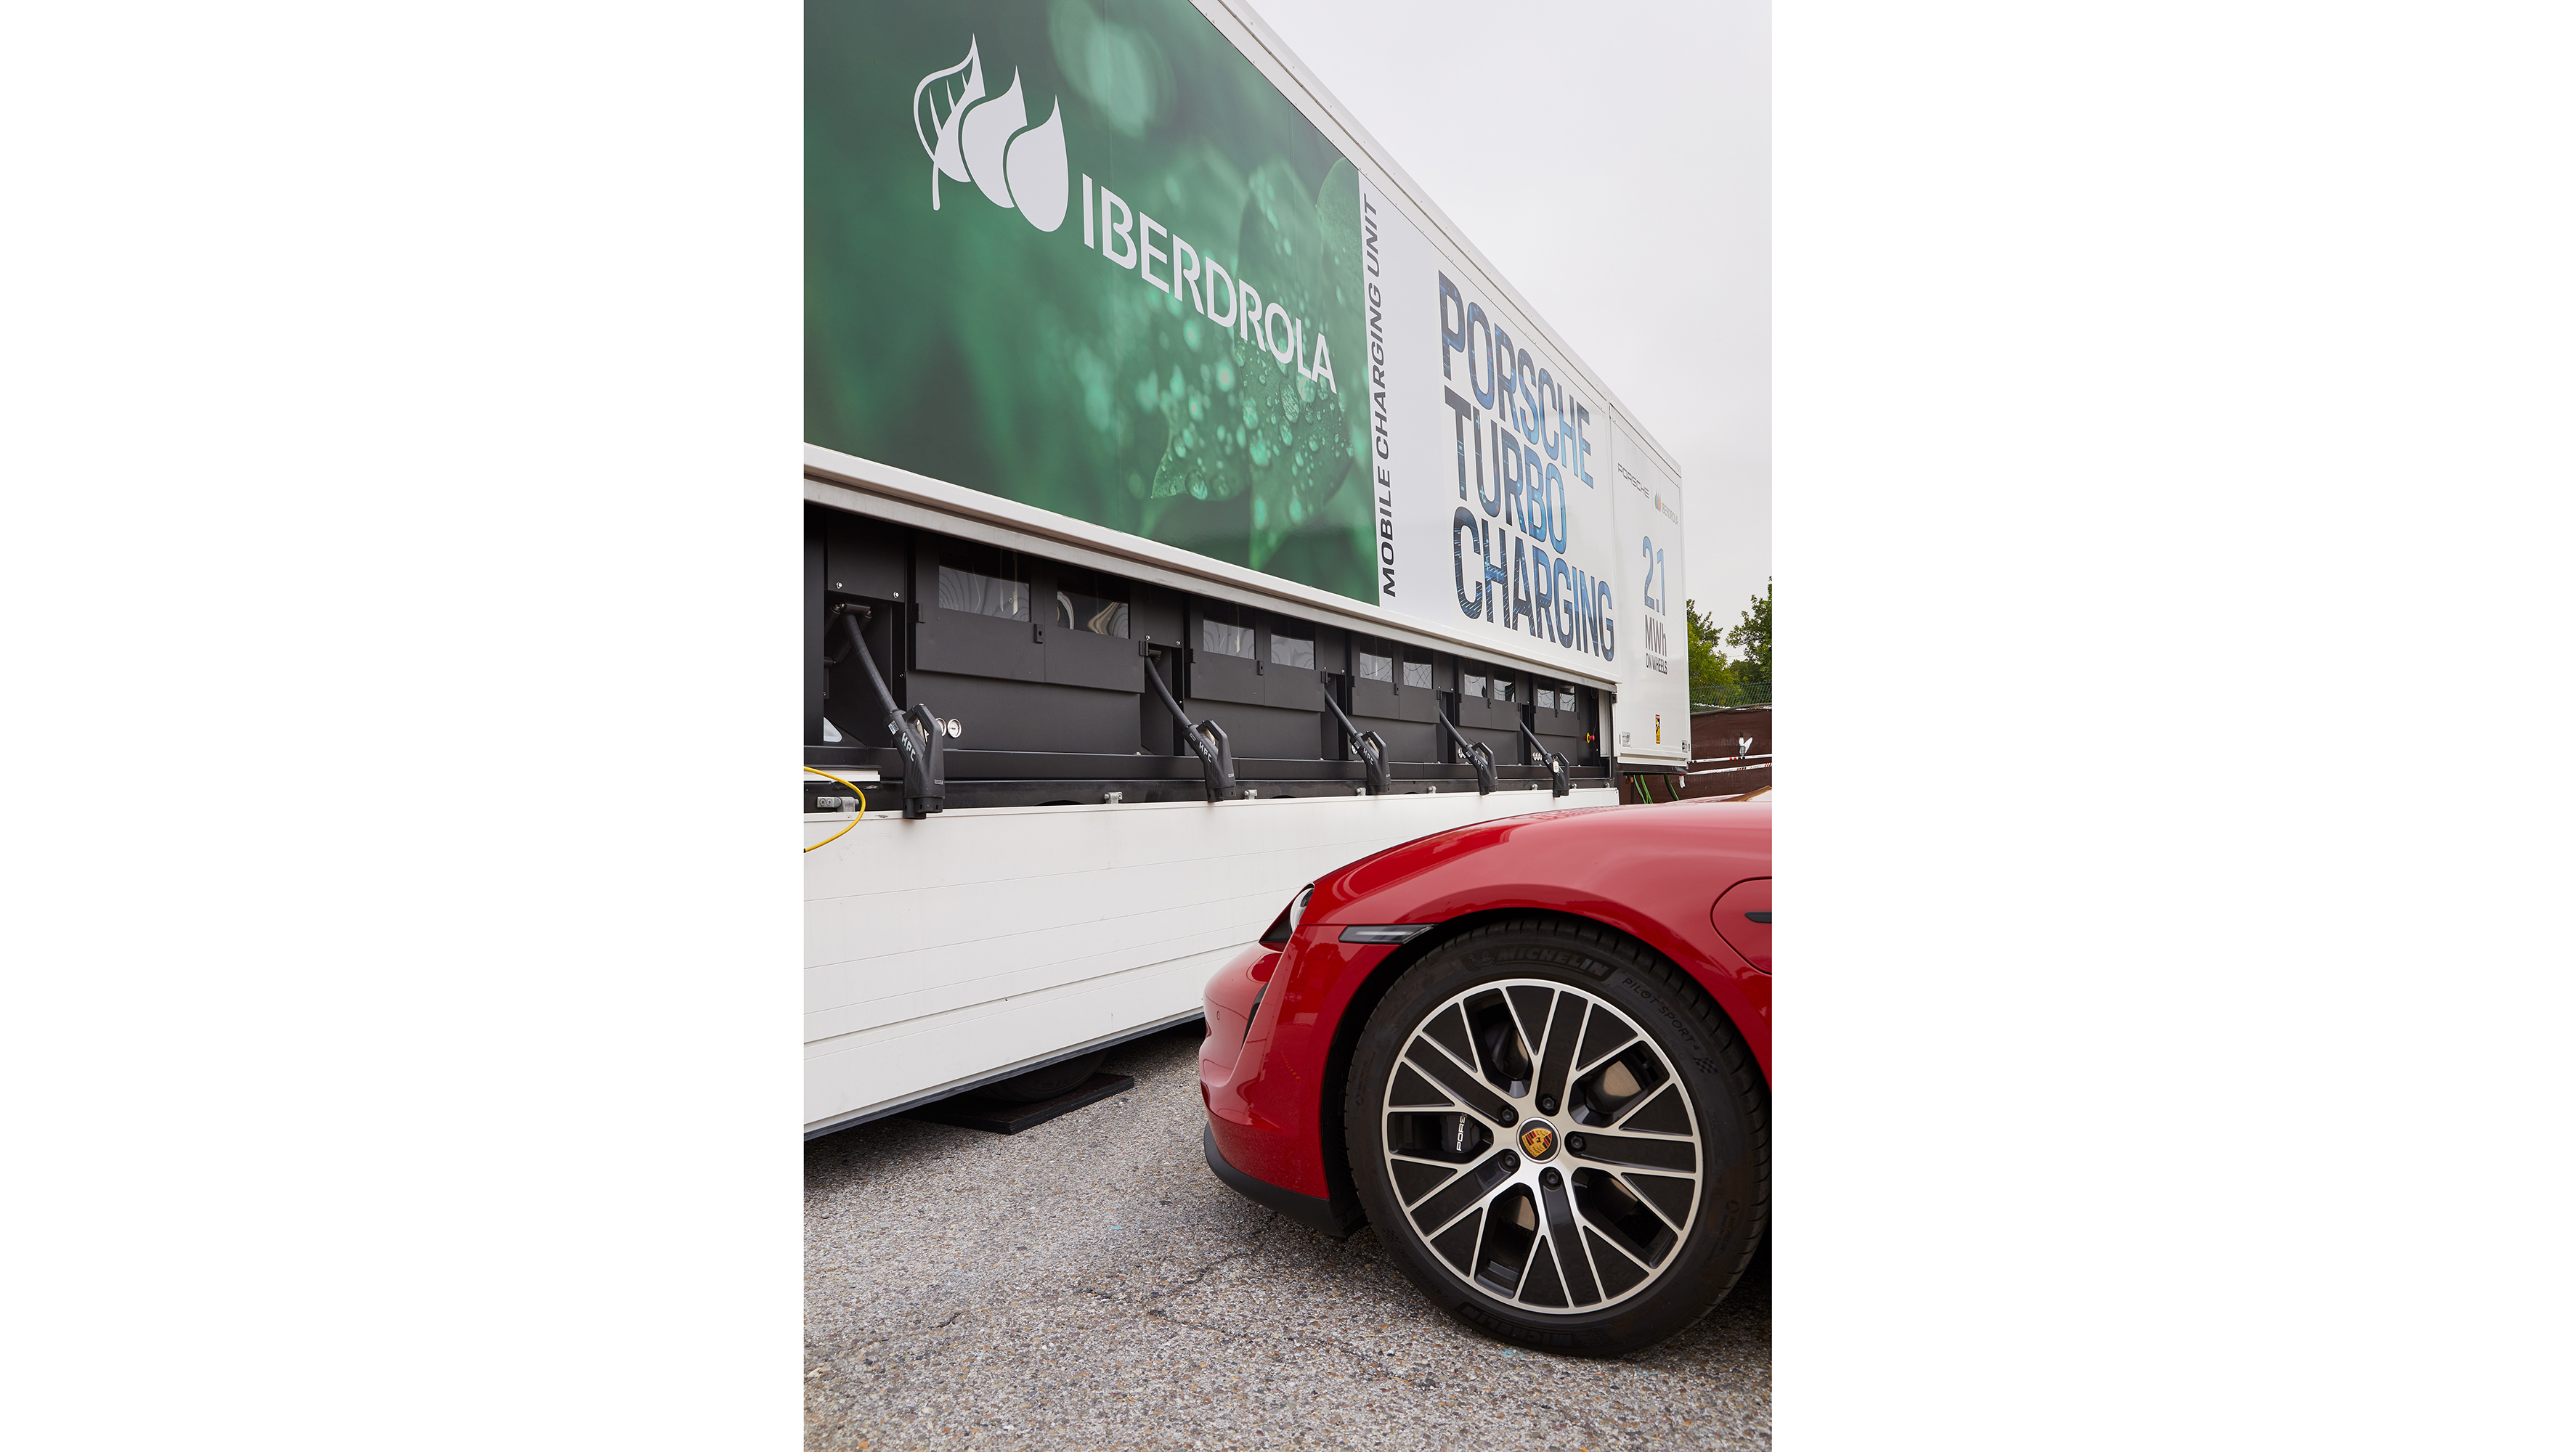 Unidad móvil de carga Porsche en Sevilla, 2021, Porsche Ibérica